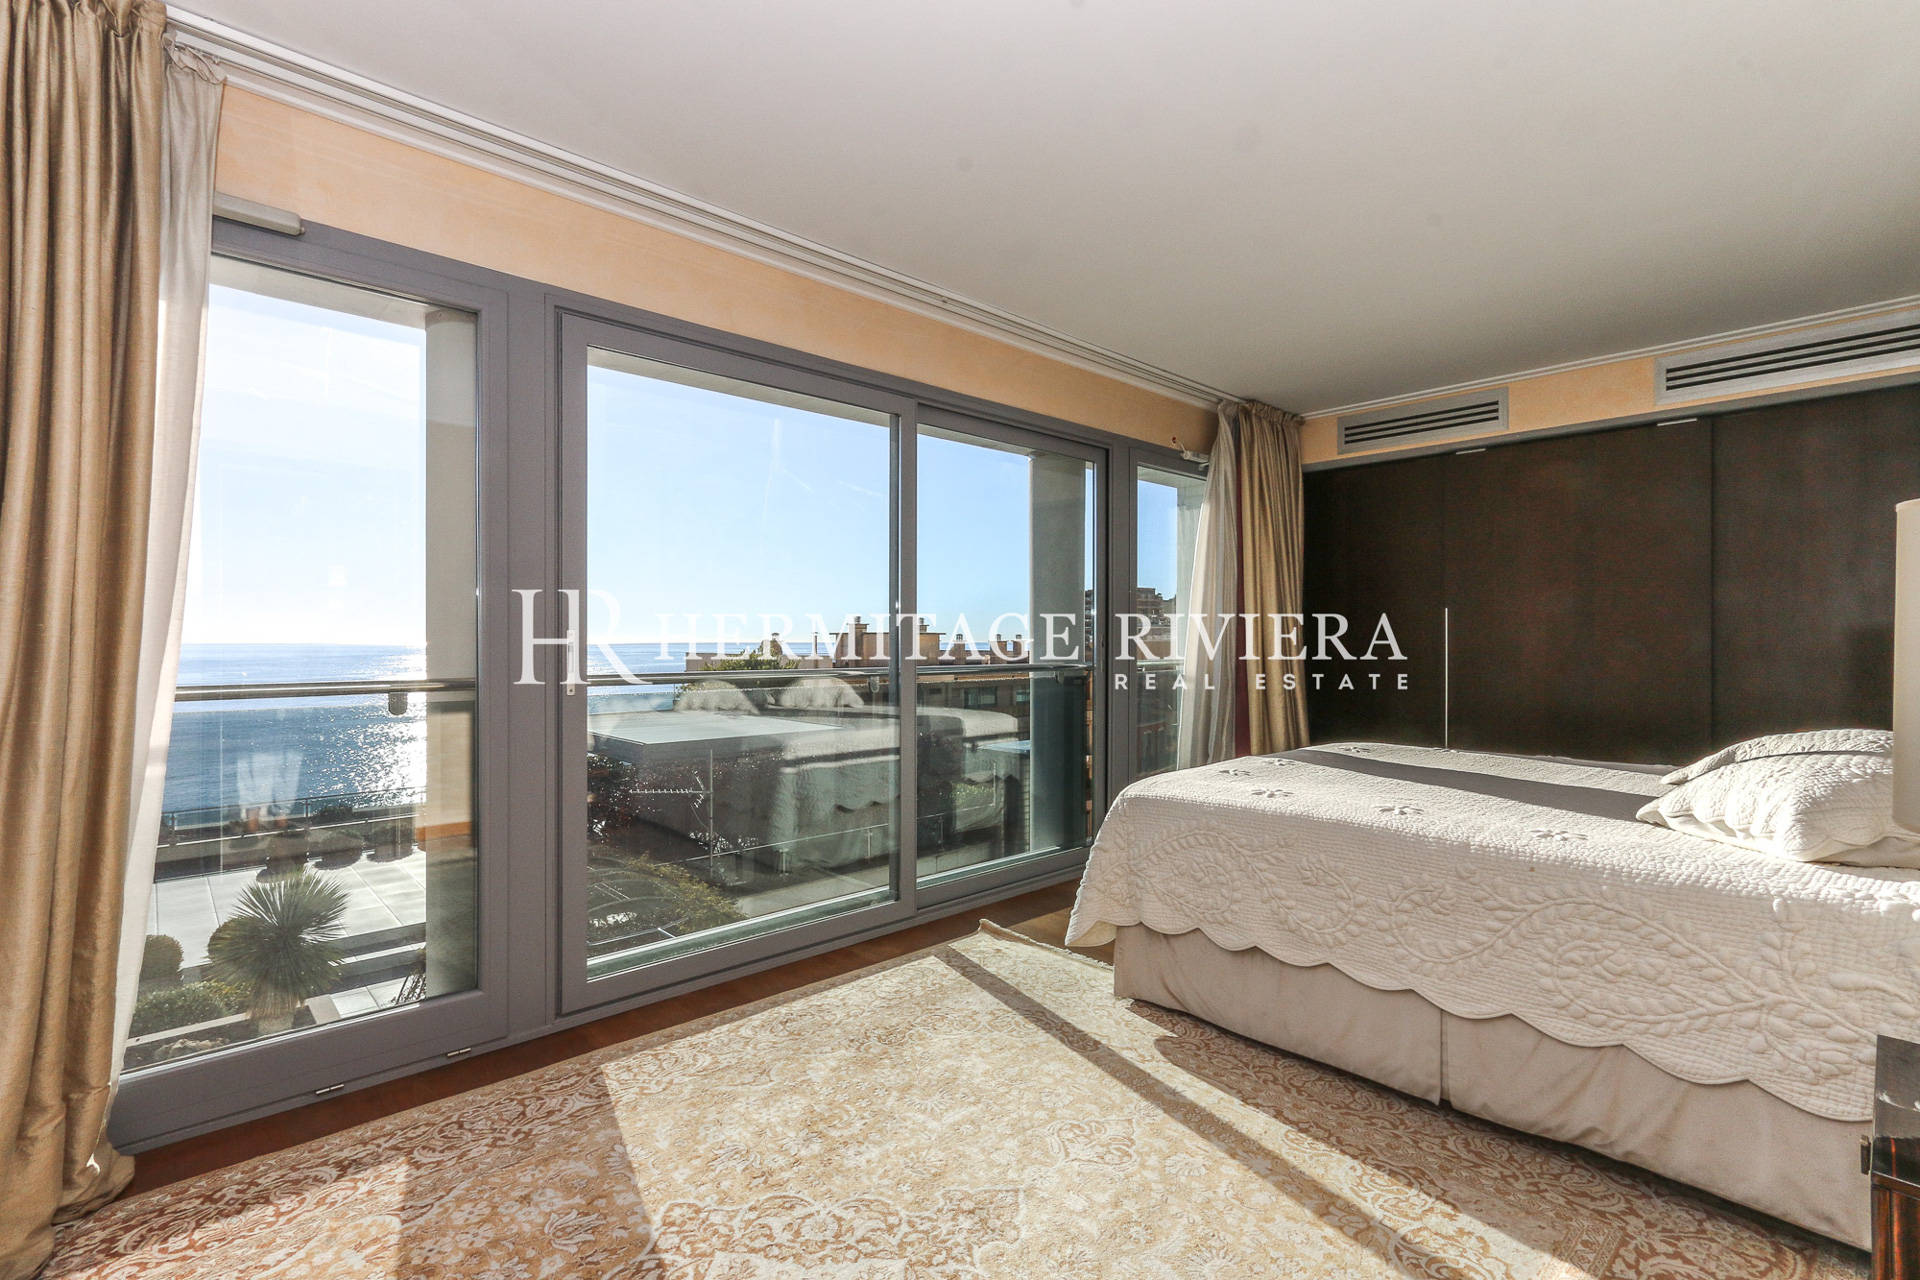 Sumptuous triplex apartment on the border with Monaco (image 18)